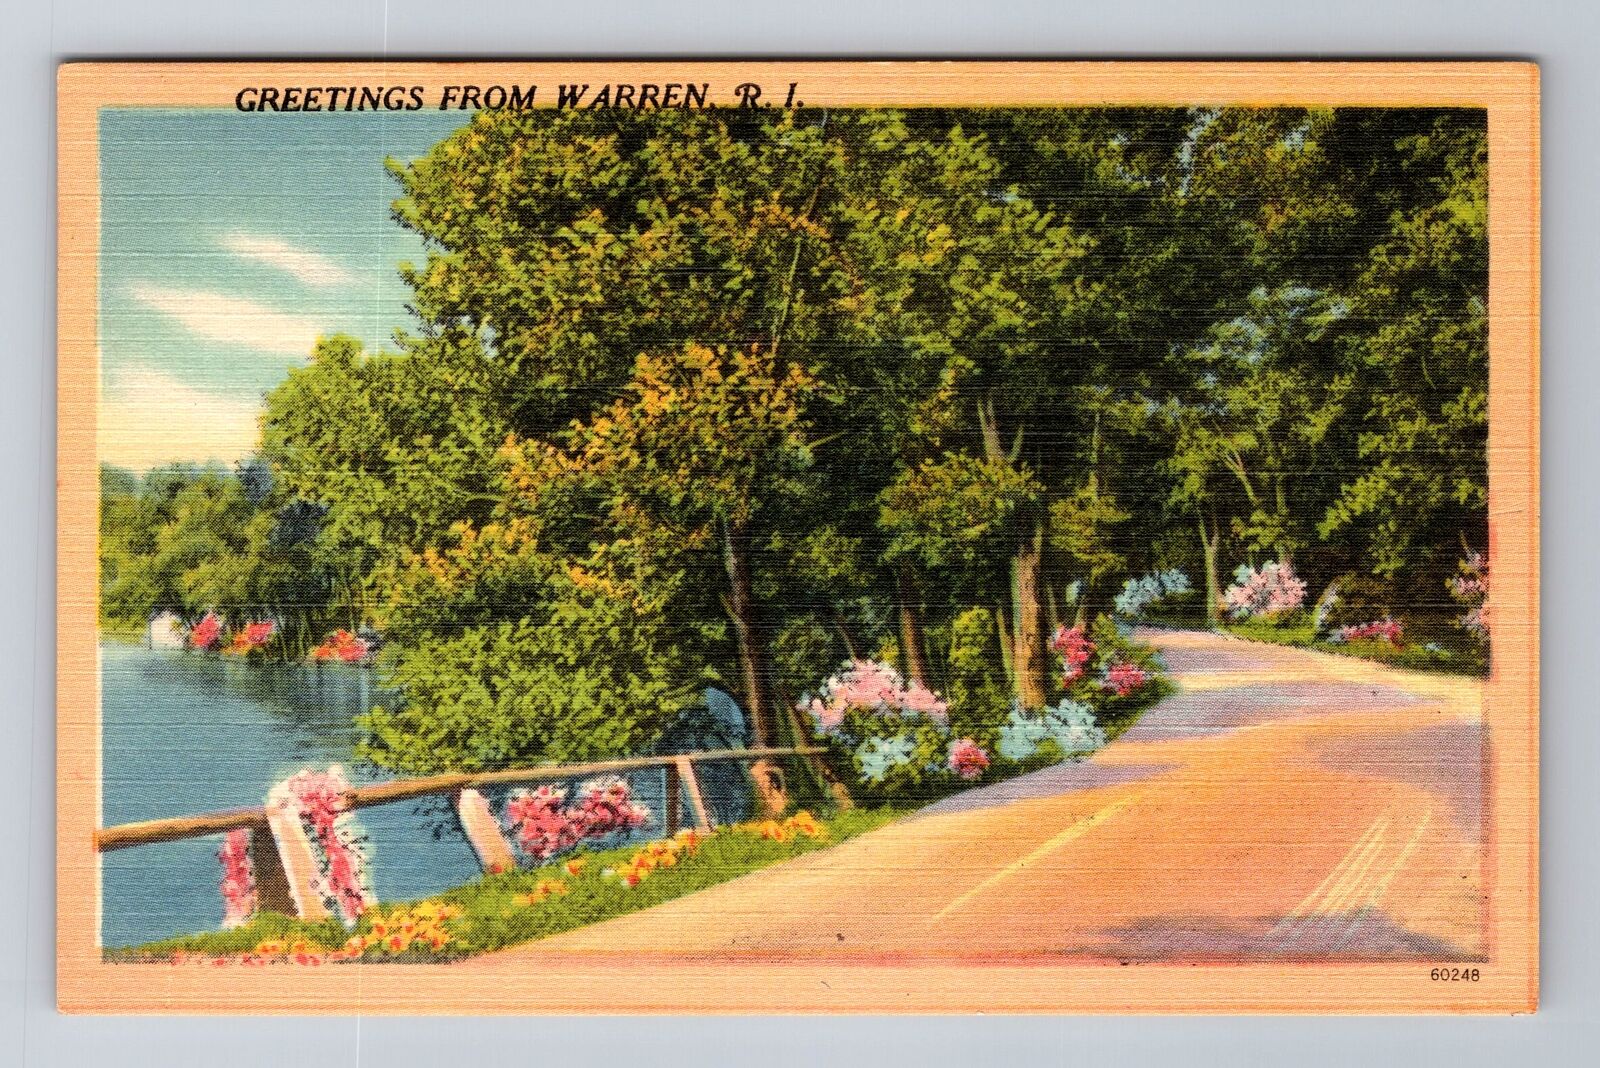 Warren RI-Rhode Island, Scenic Greetings Road, Antique Souvenir Vintage Postcard